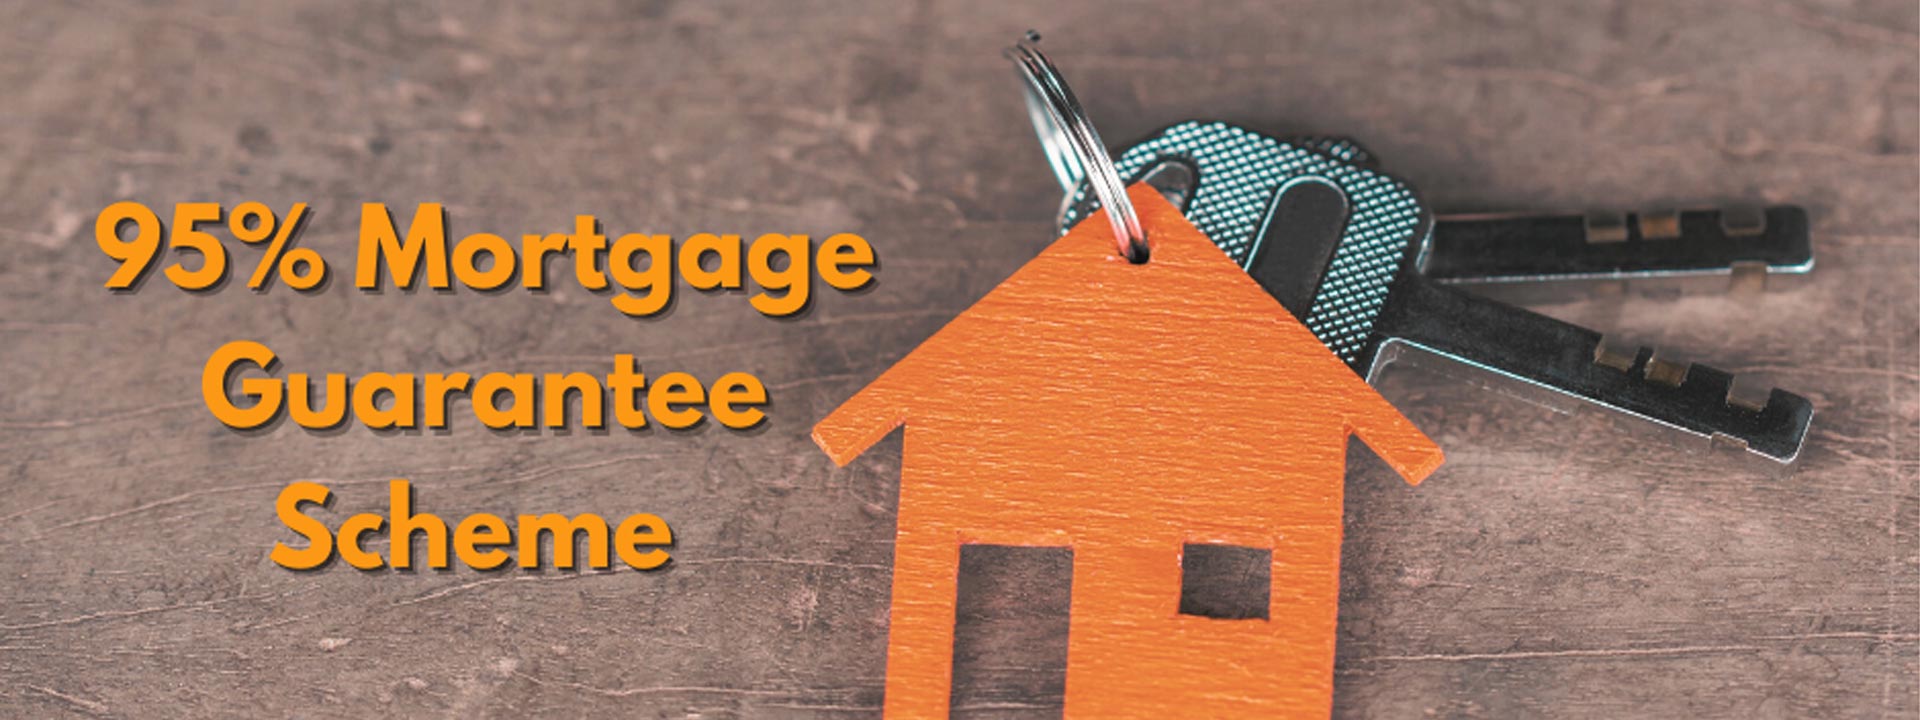 Willowlace News - 95% Mortgage Guarantee Scheme Header